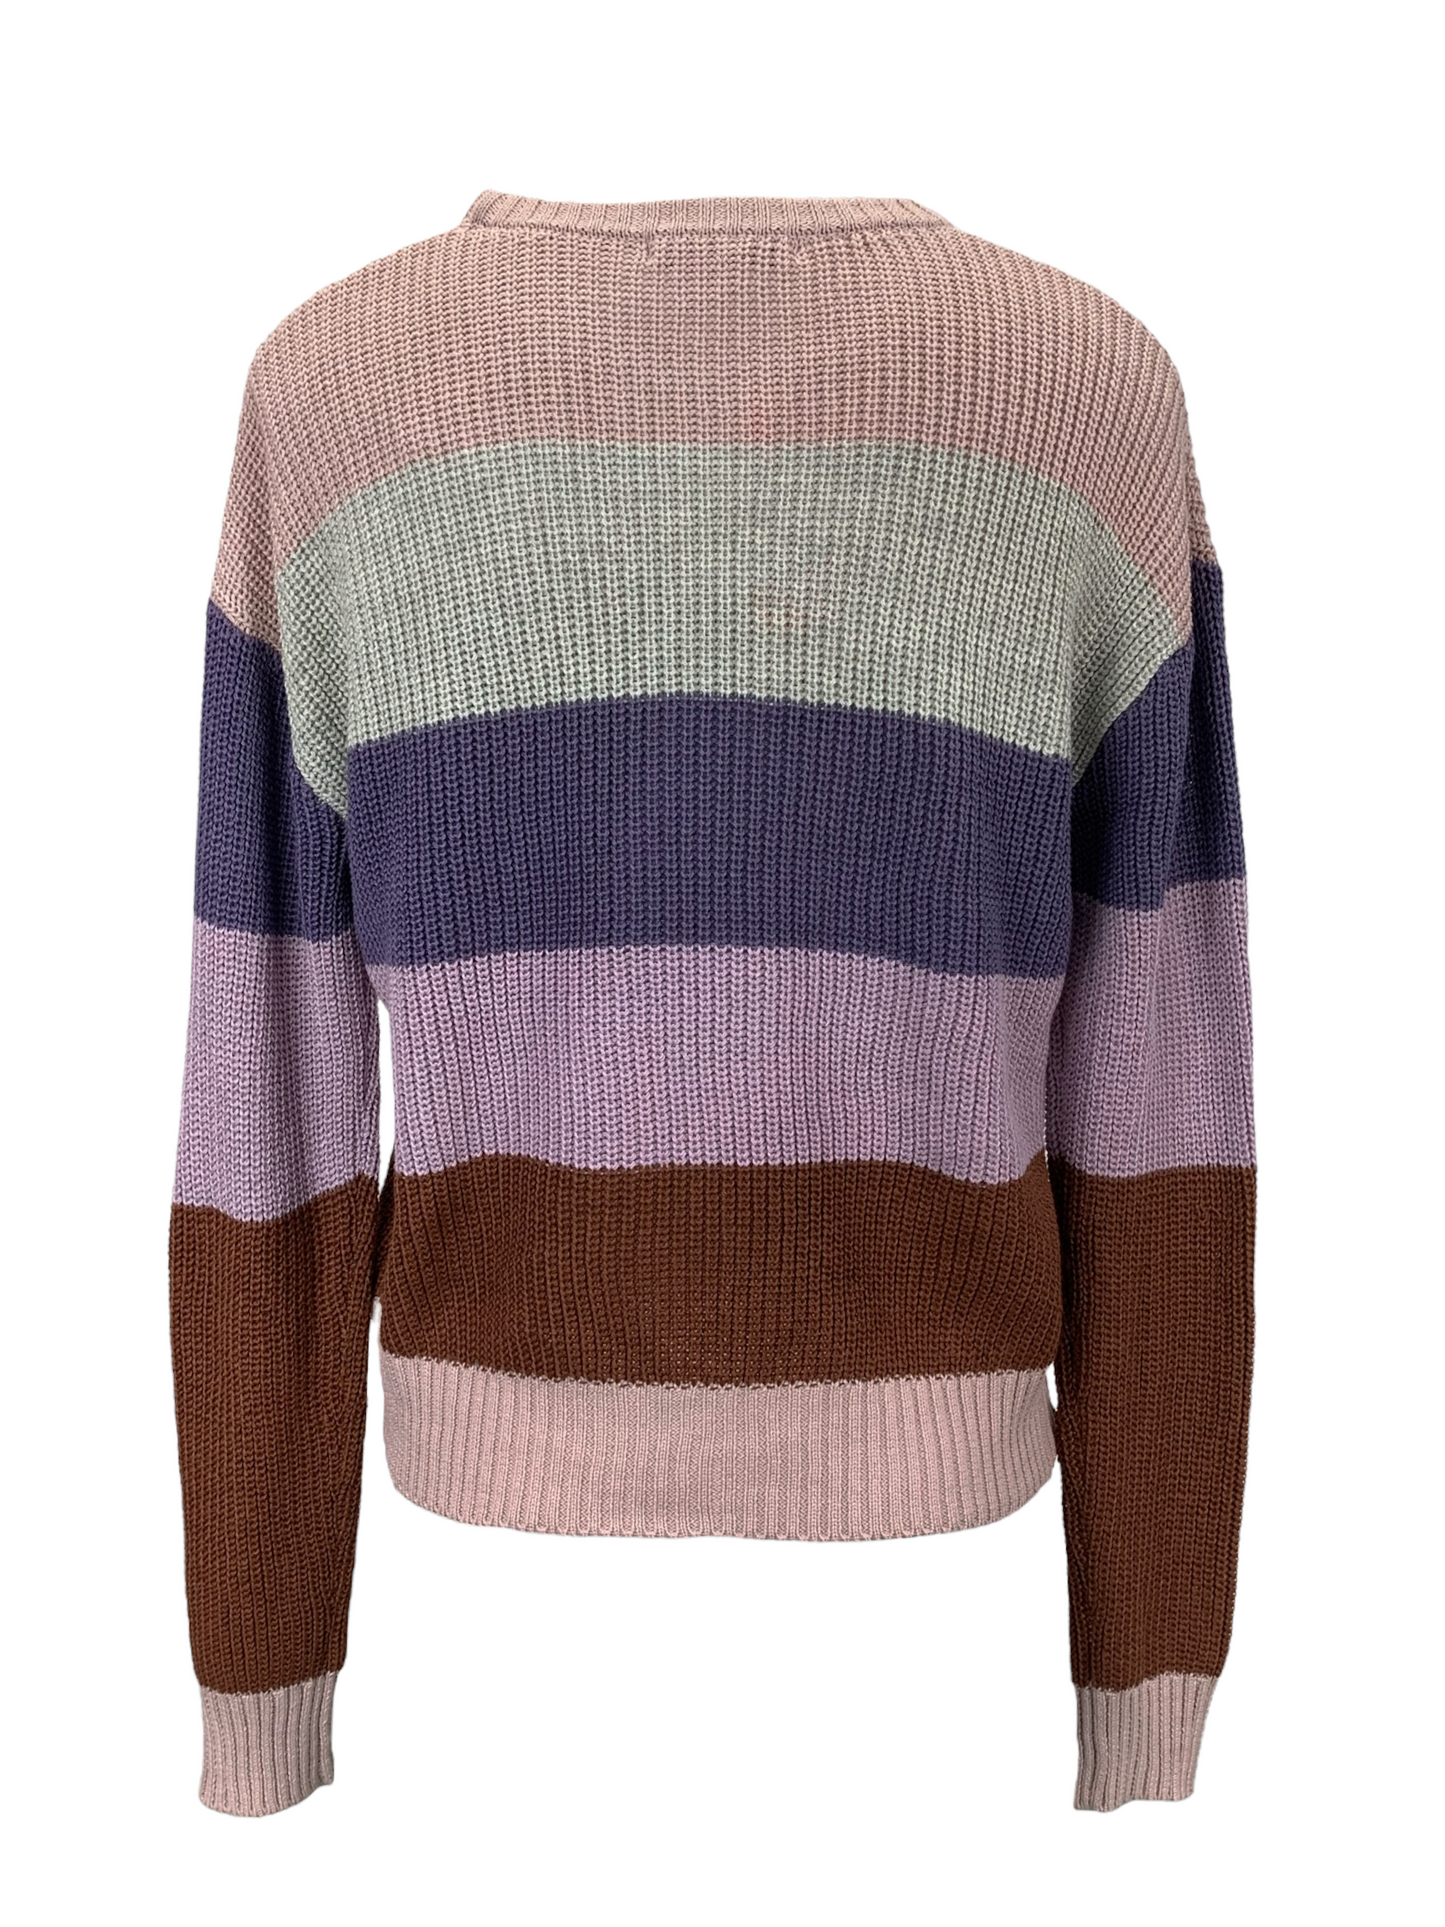 Women's Mandarine&Co pink sweater